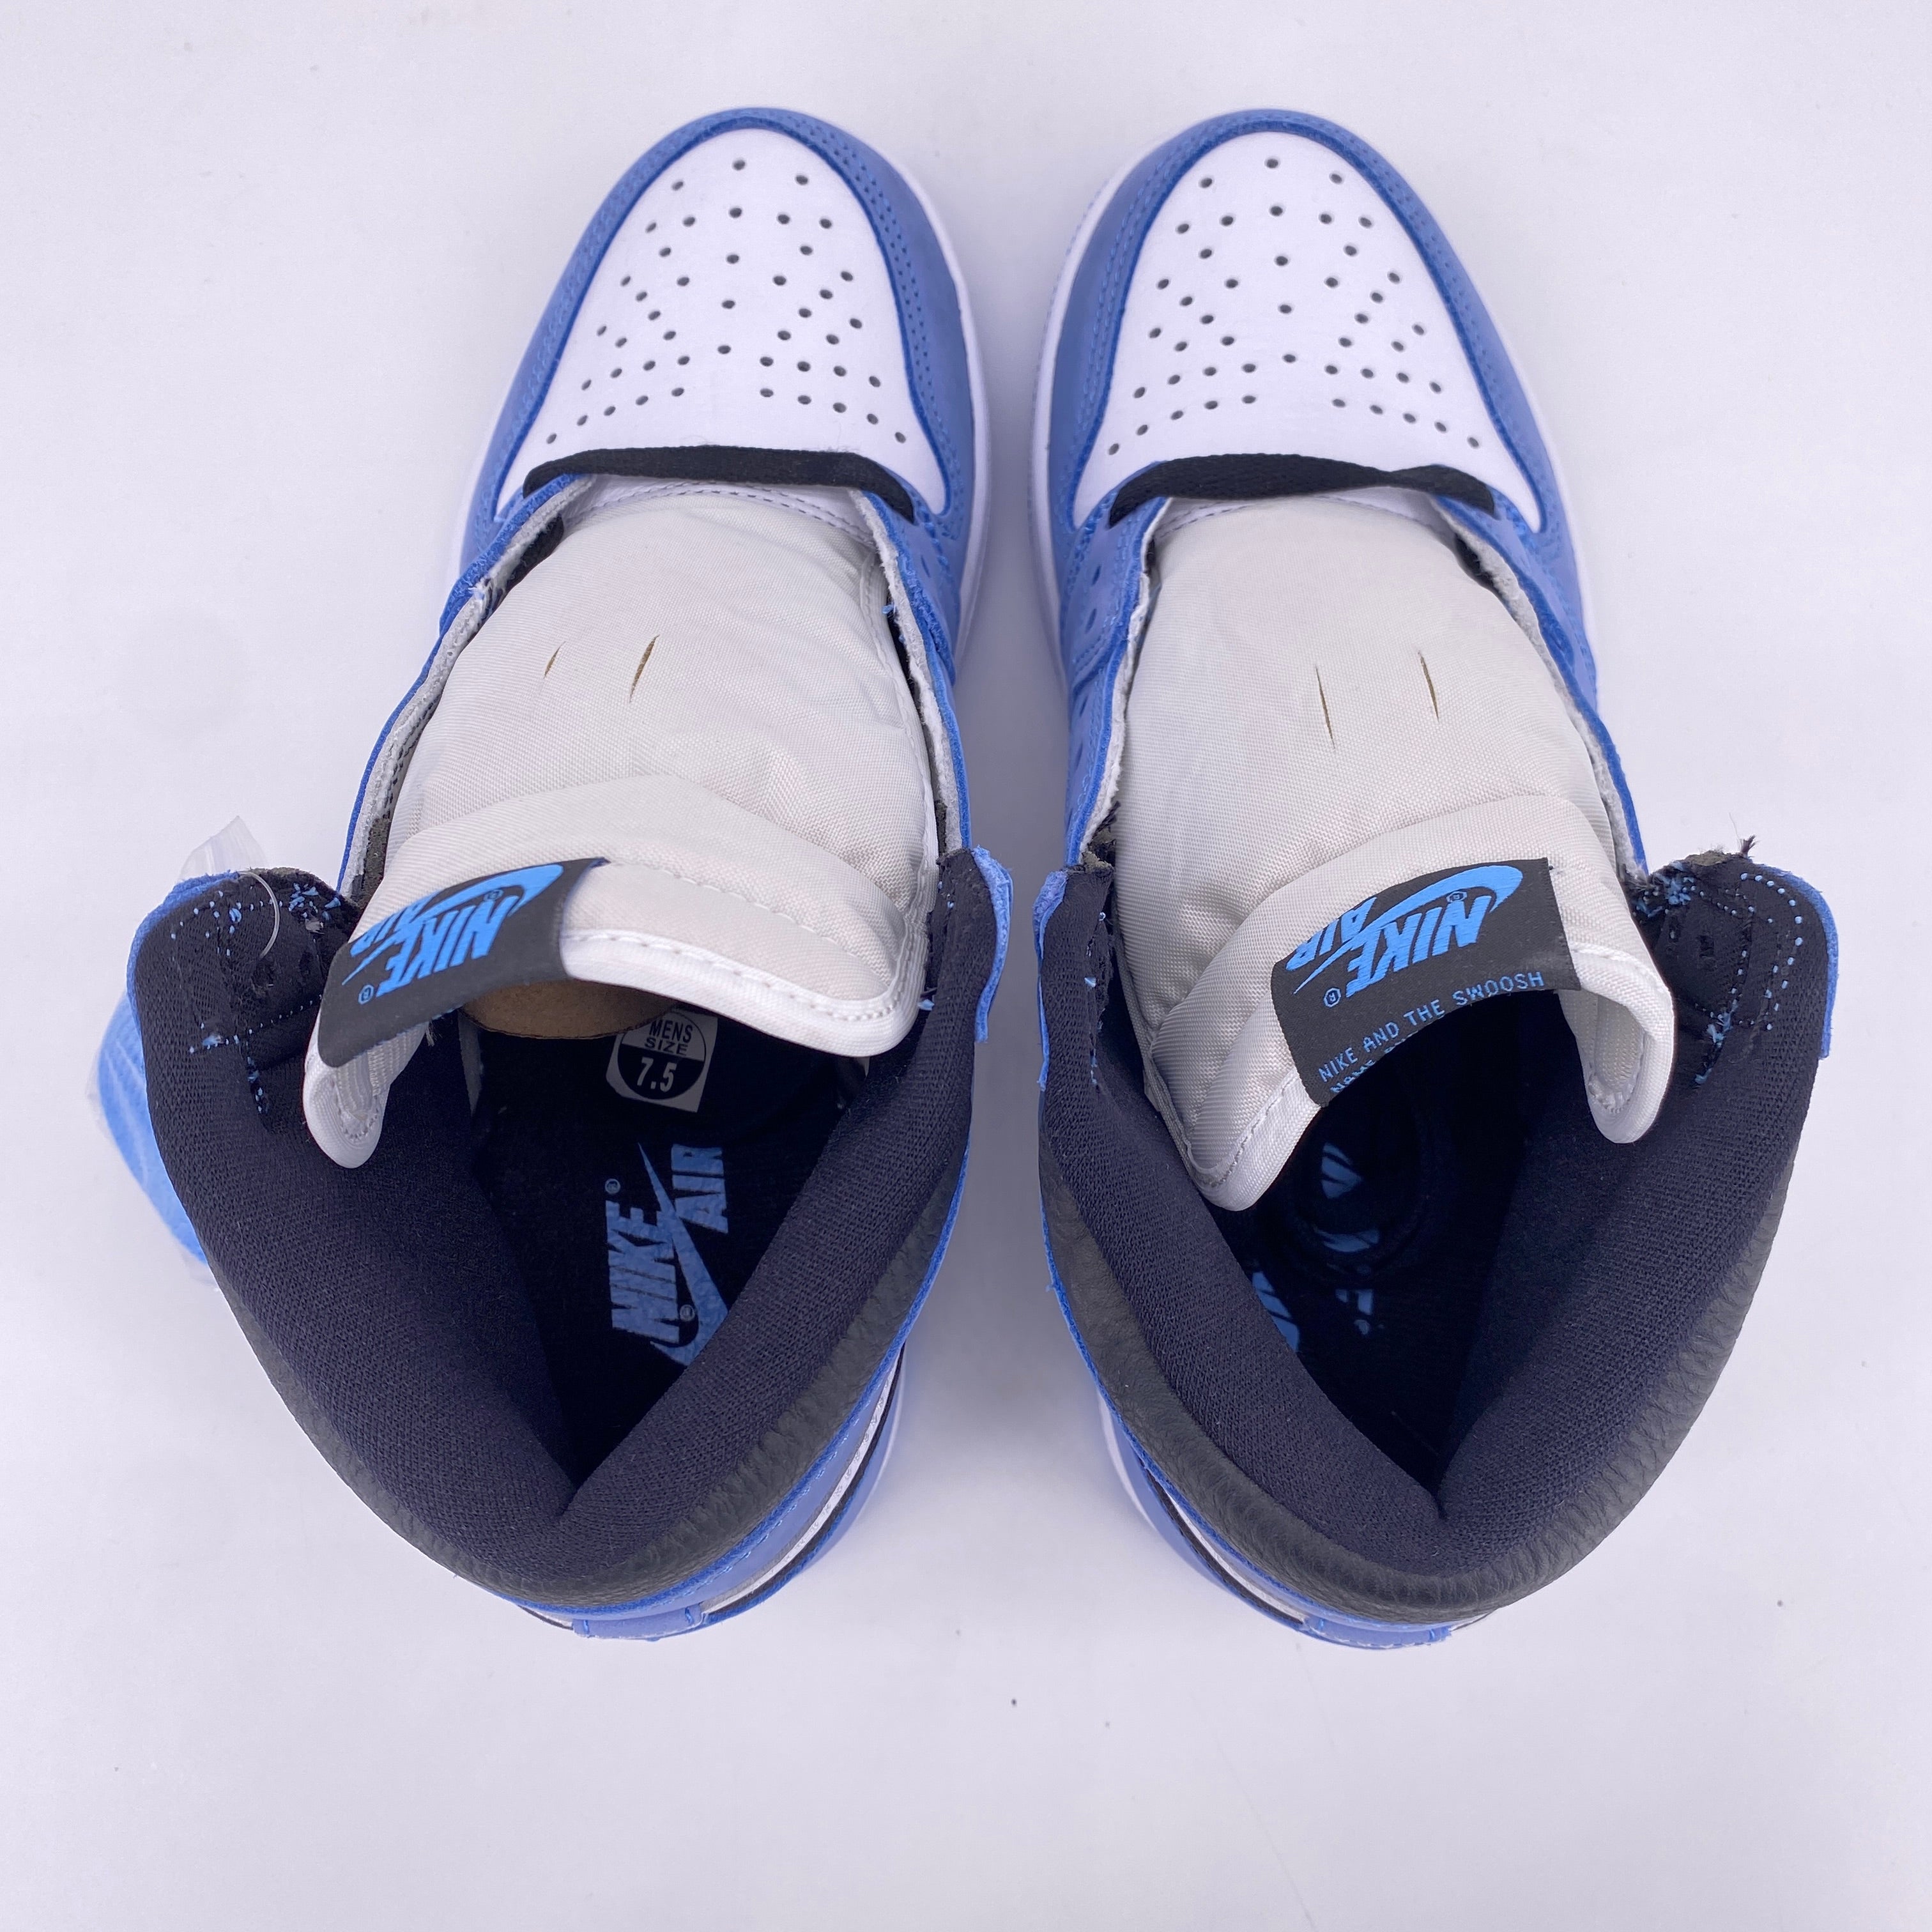 Air Jordan 1 Retro "University Blue" 2021 New Size 7.5